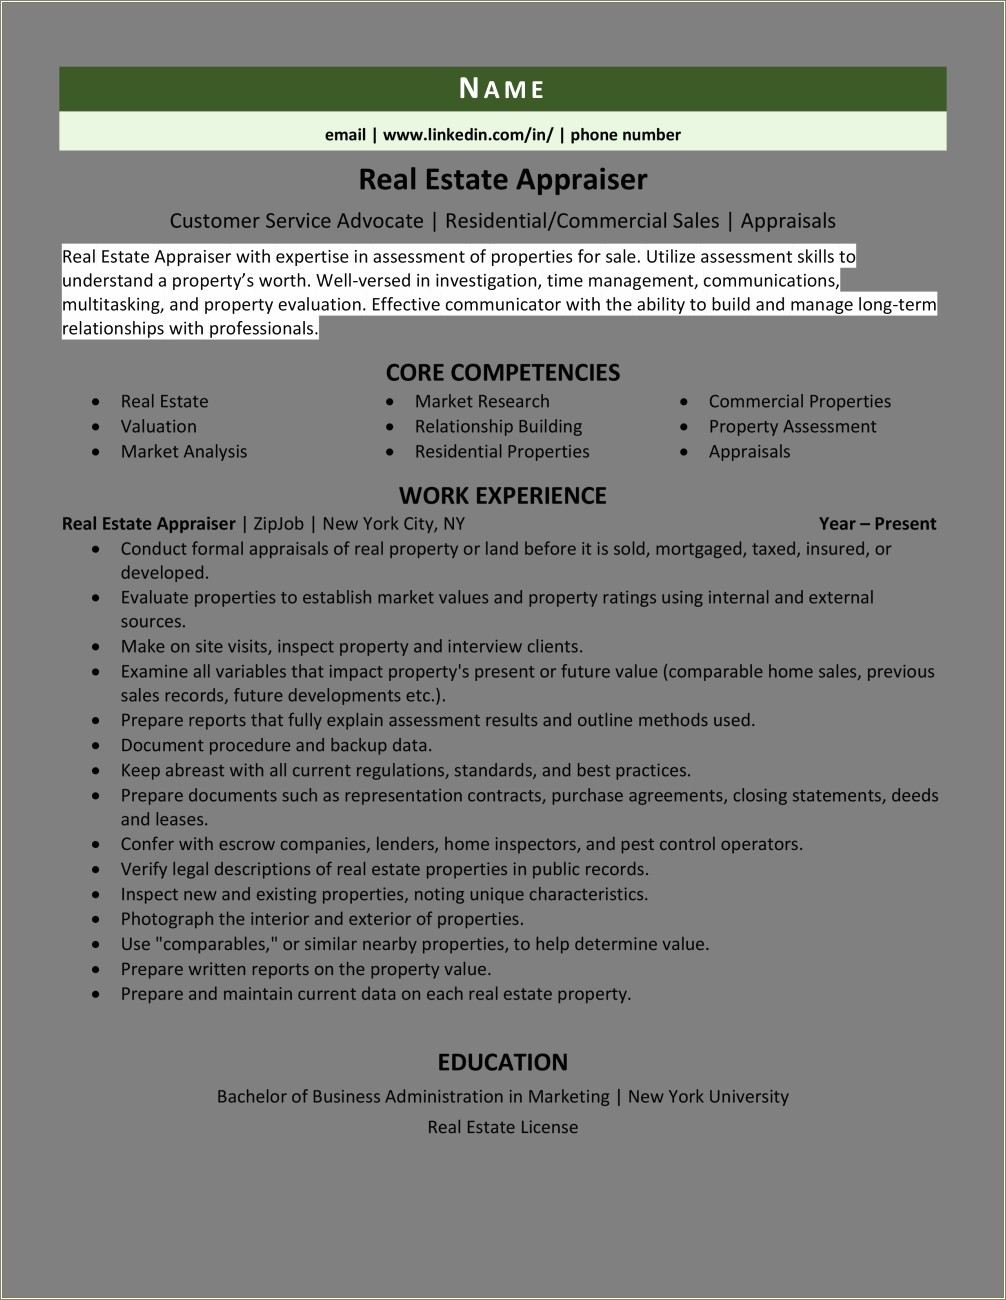 Resume Examples For Real Estate Appraiser